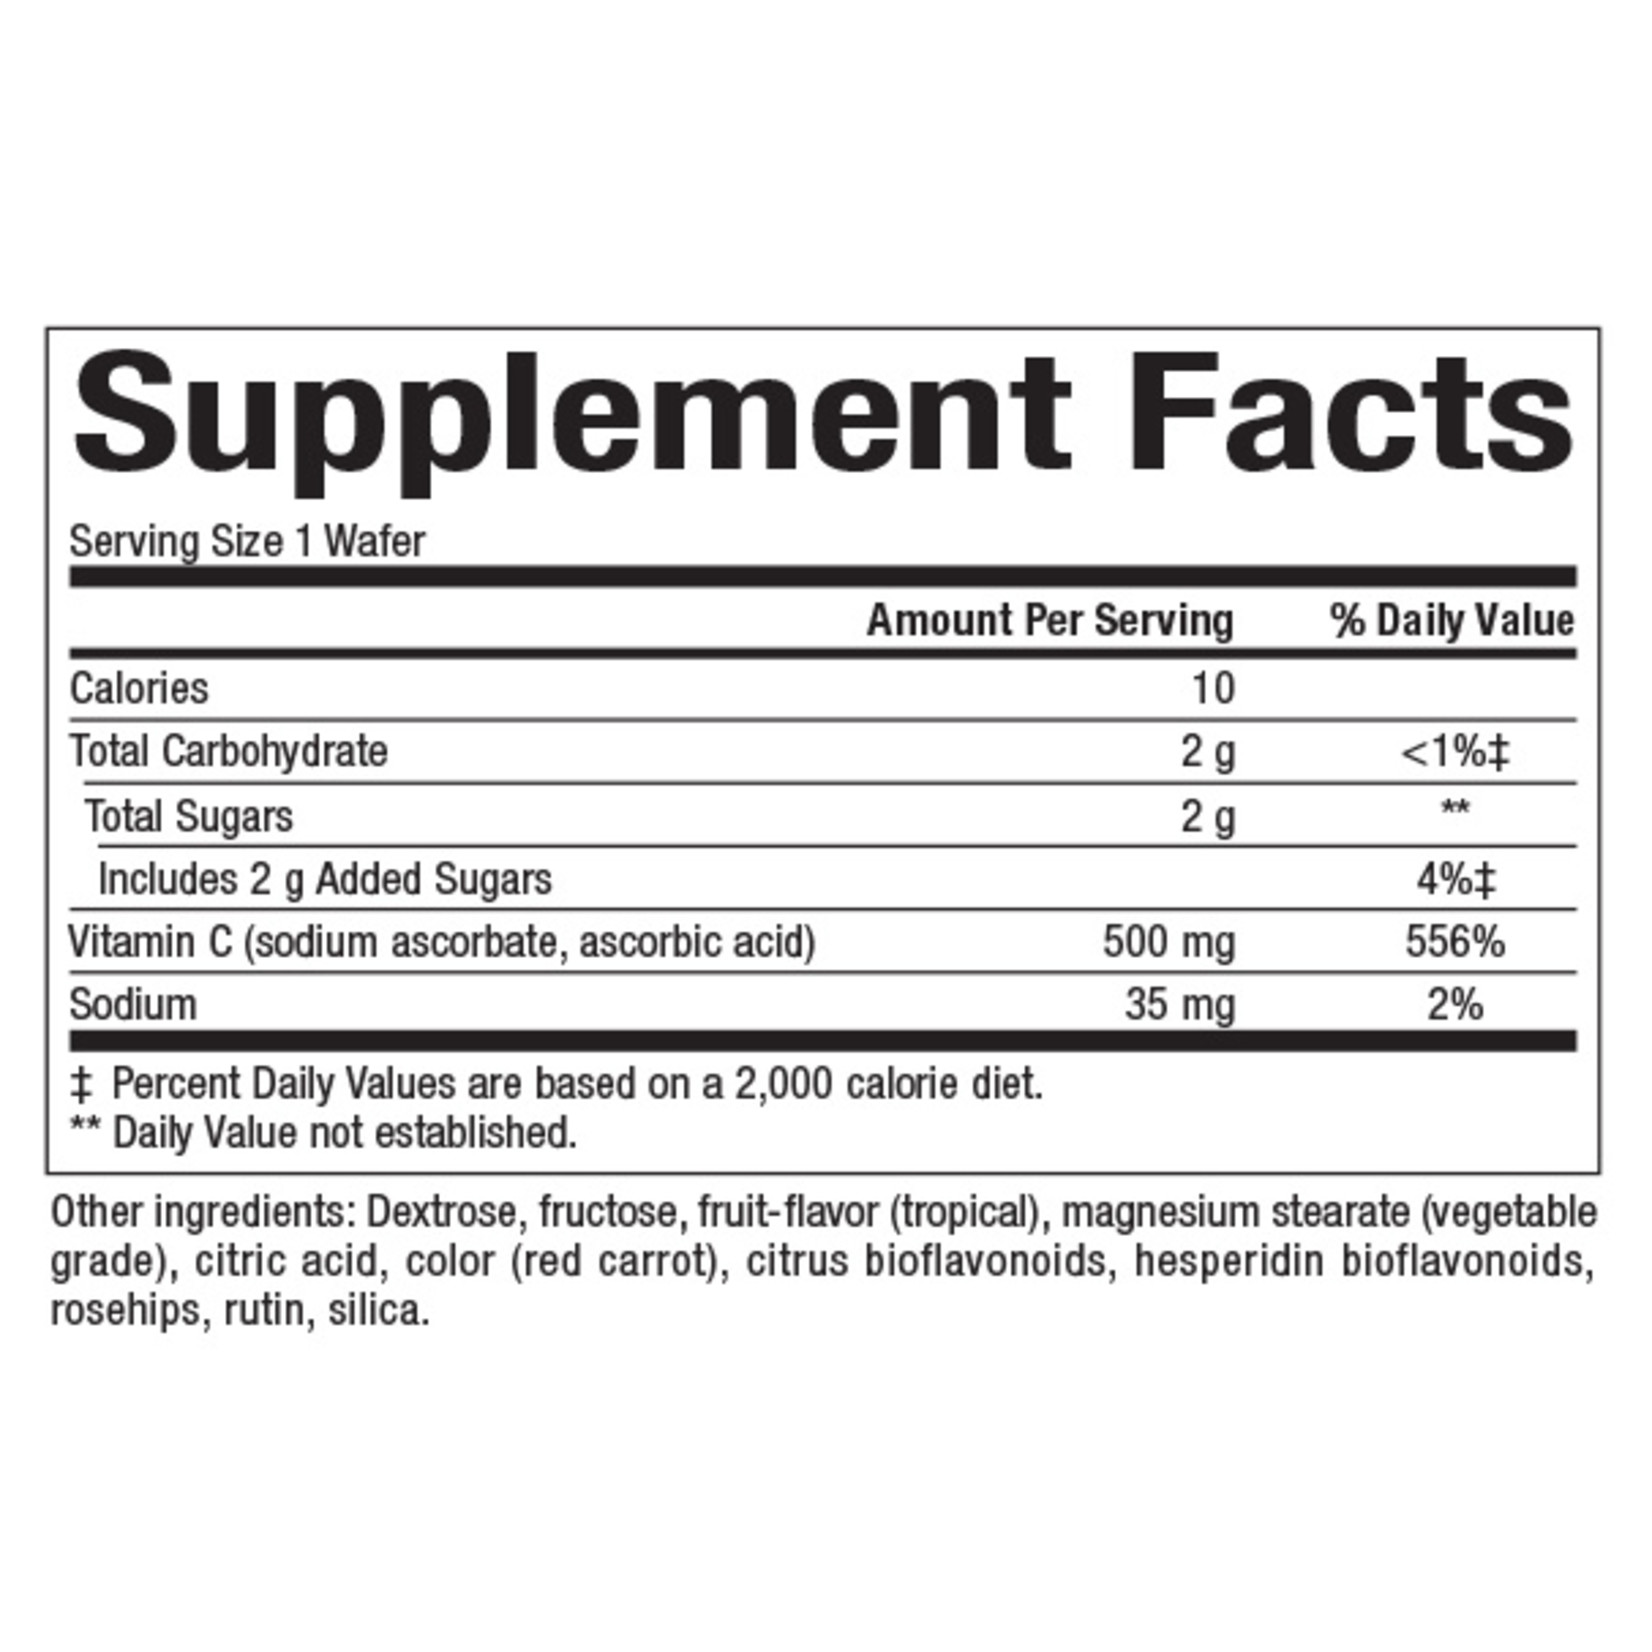 Natural Factors Natural Factors - C 500 mg Natural Fruit Chews Jungle Juice - 90 Tablets